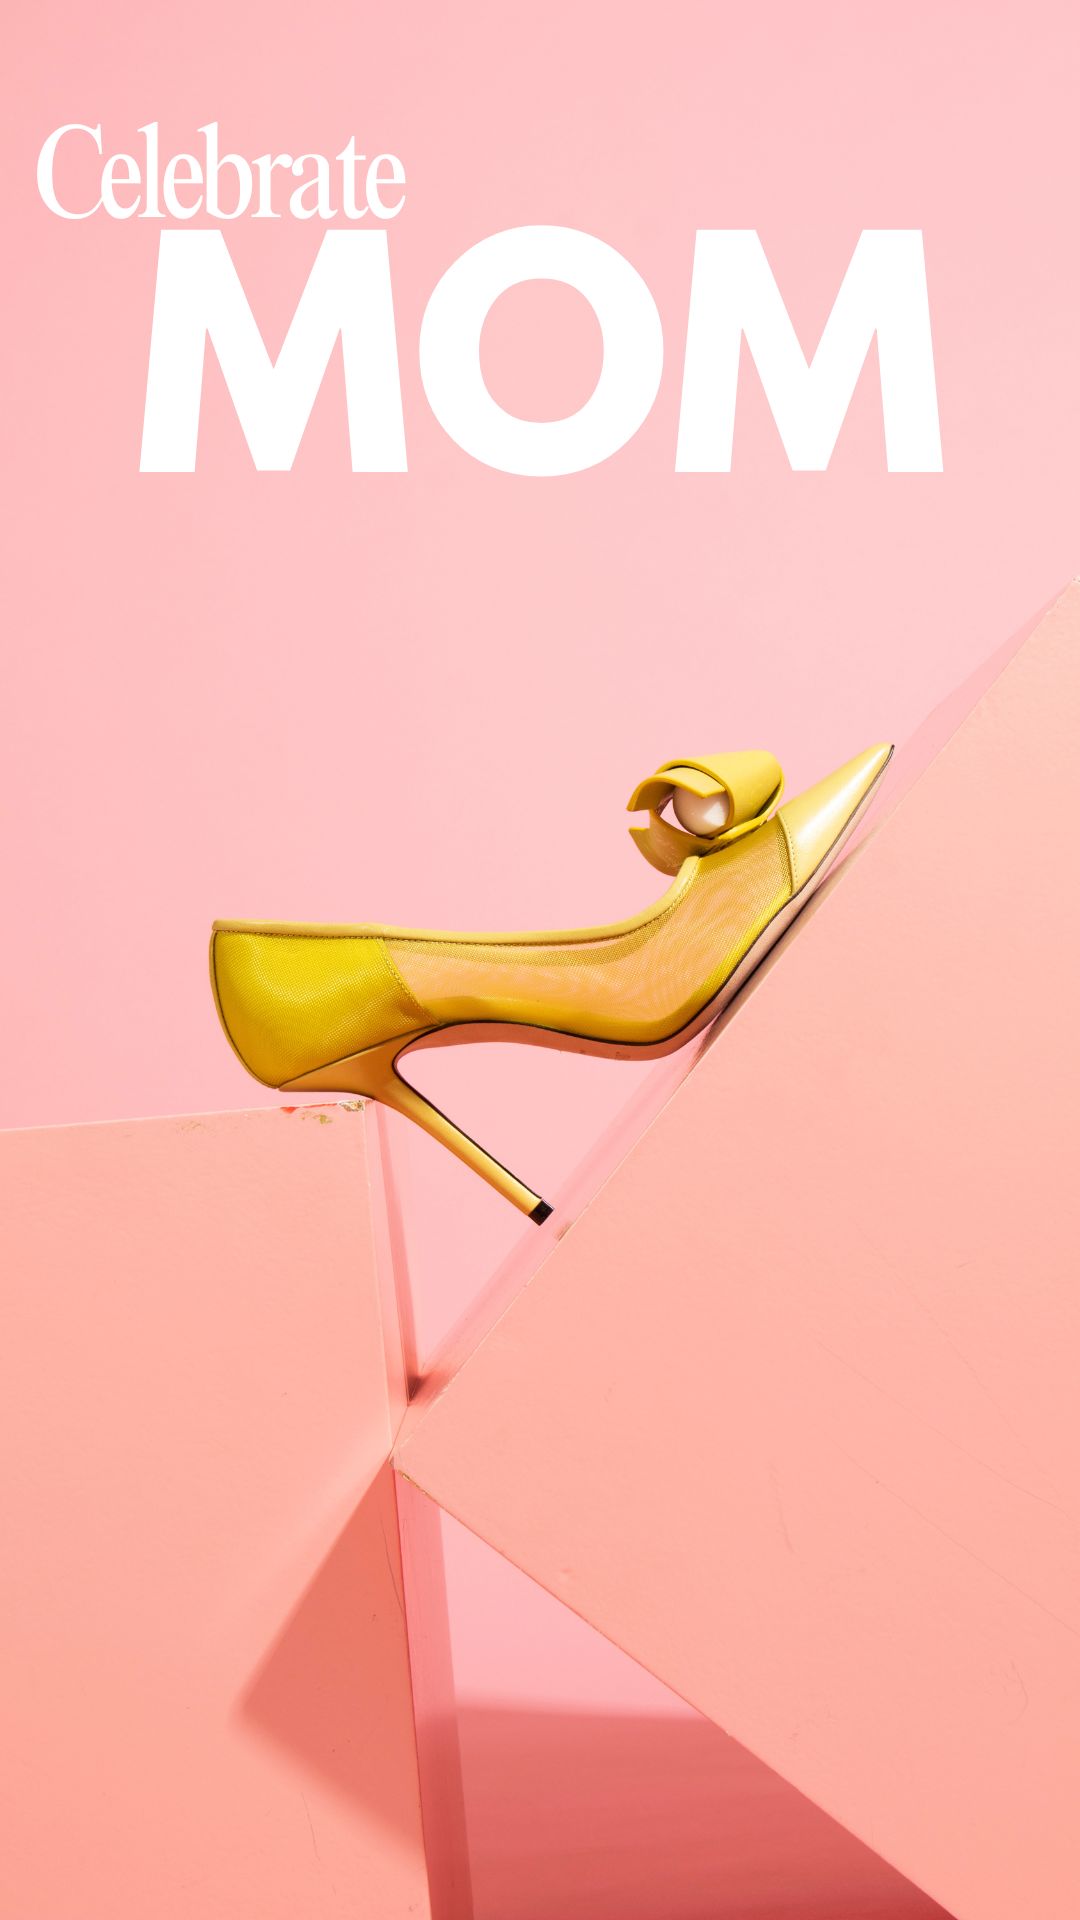 Celebrate your mom